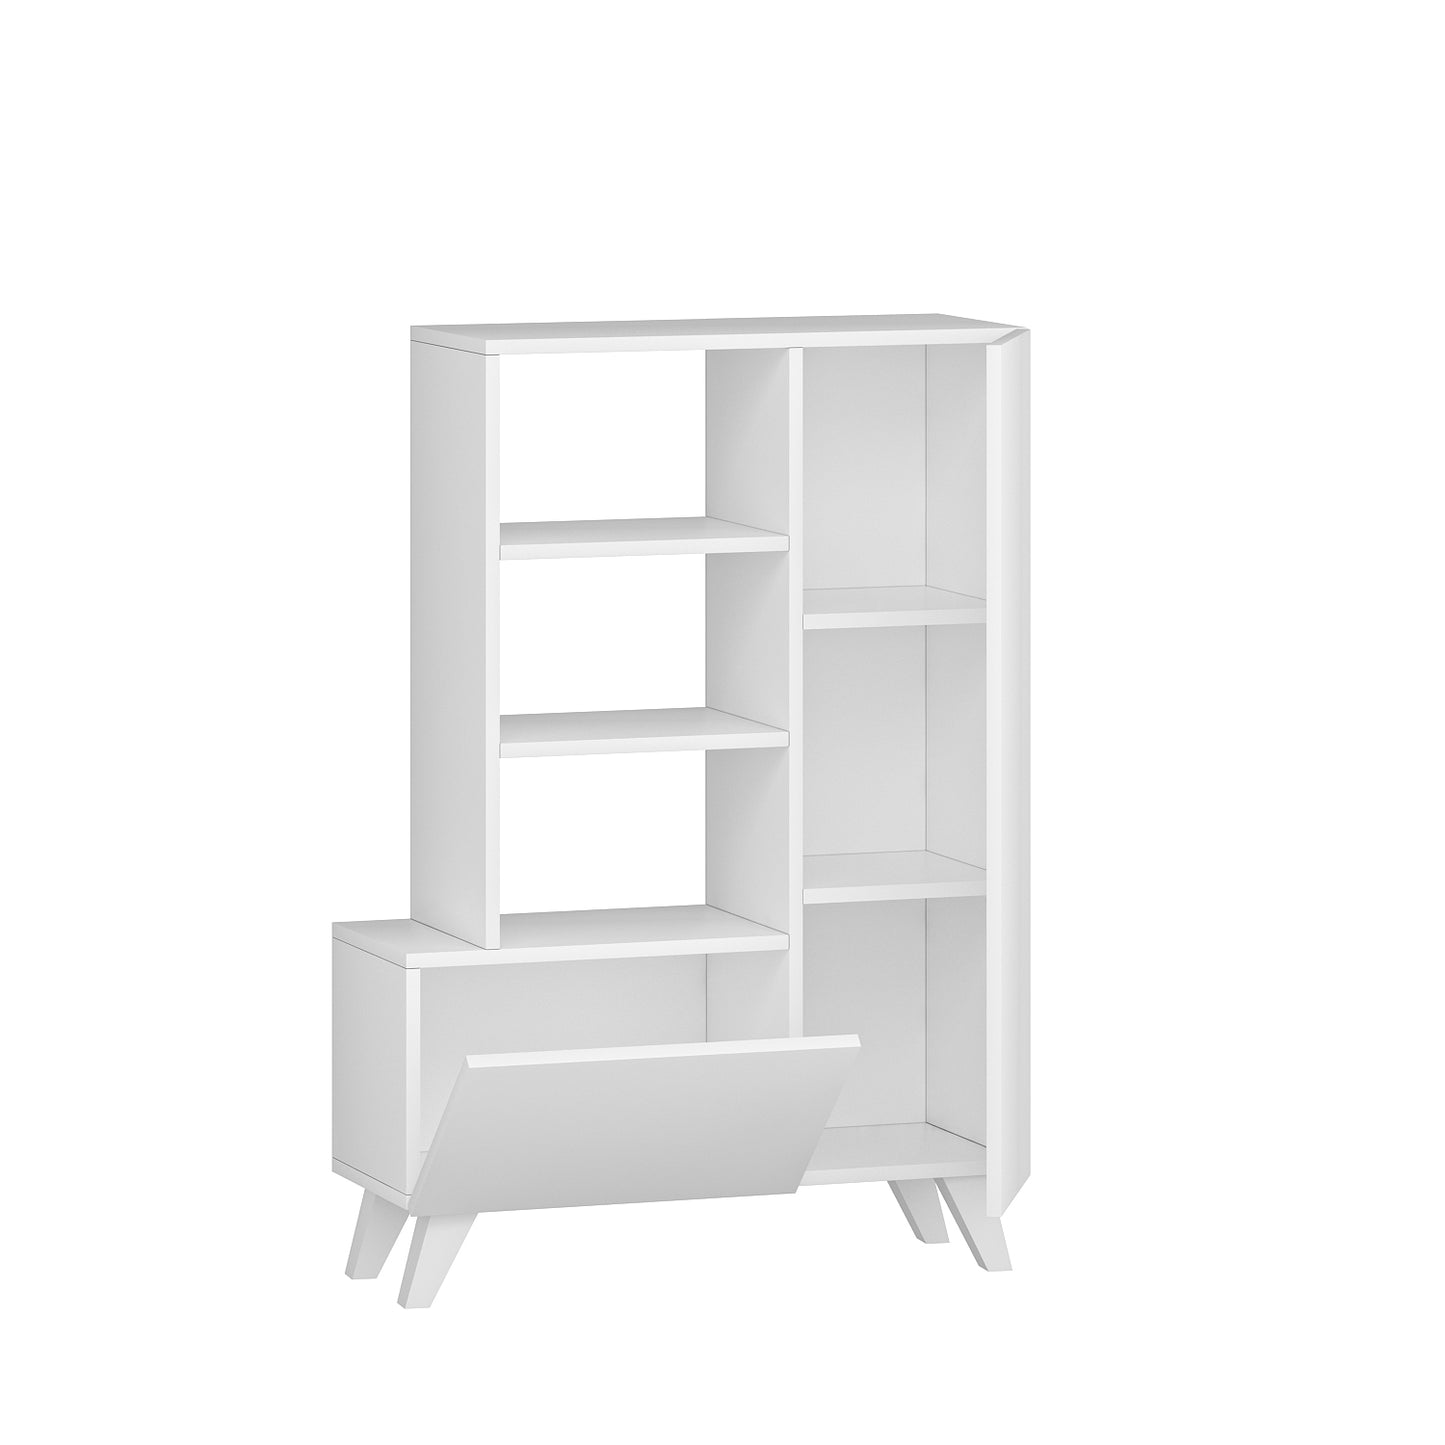 Evian Multi Purpose Cabinet Shelf